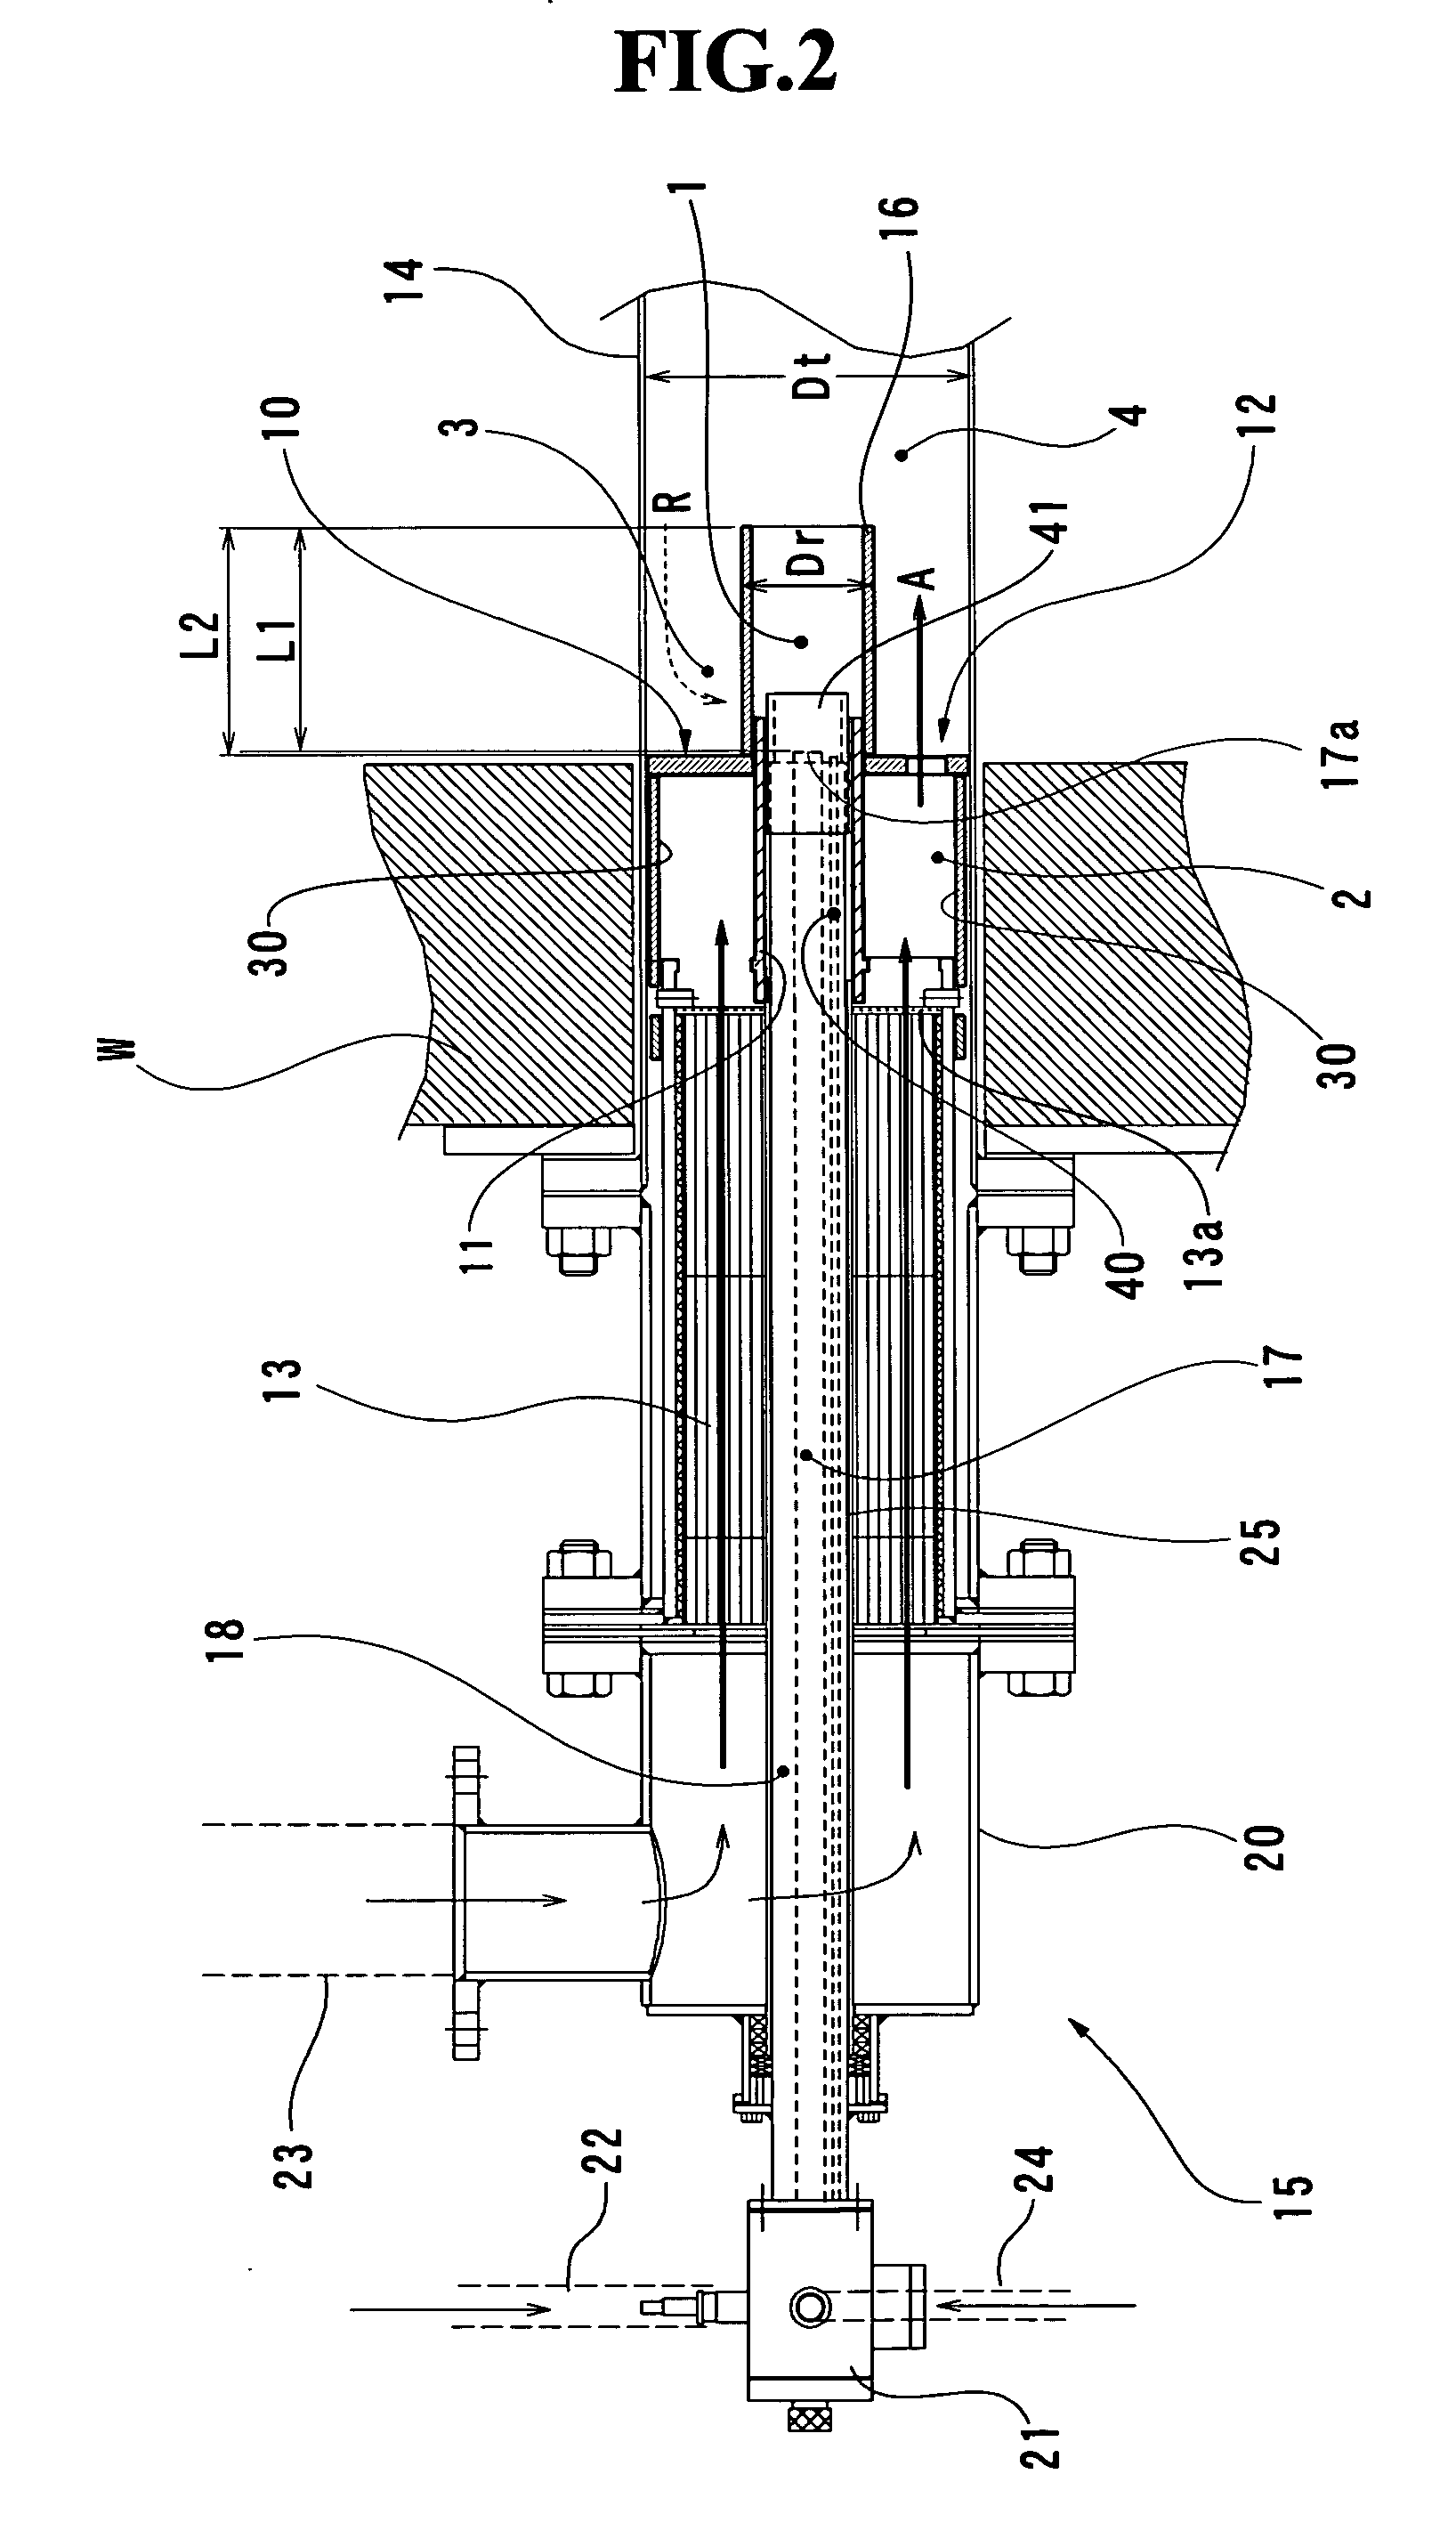 Alternate combustion type regenerative radiant tube burner apparatus